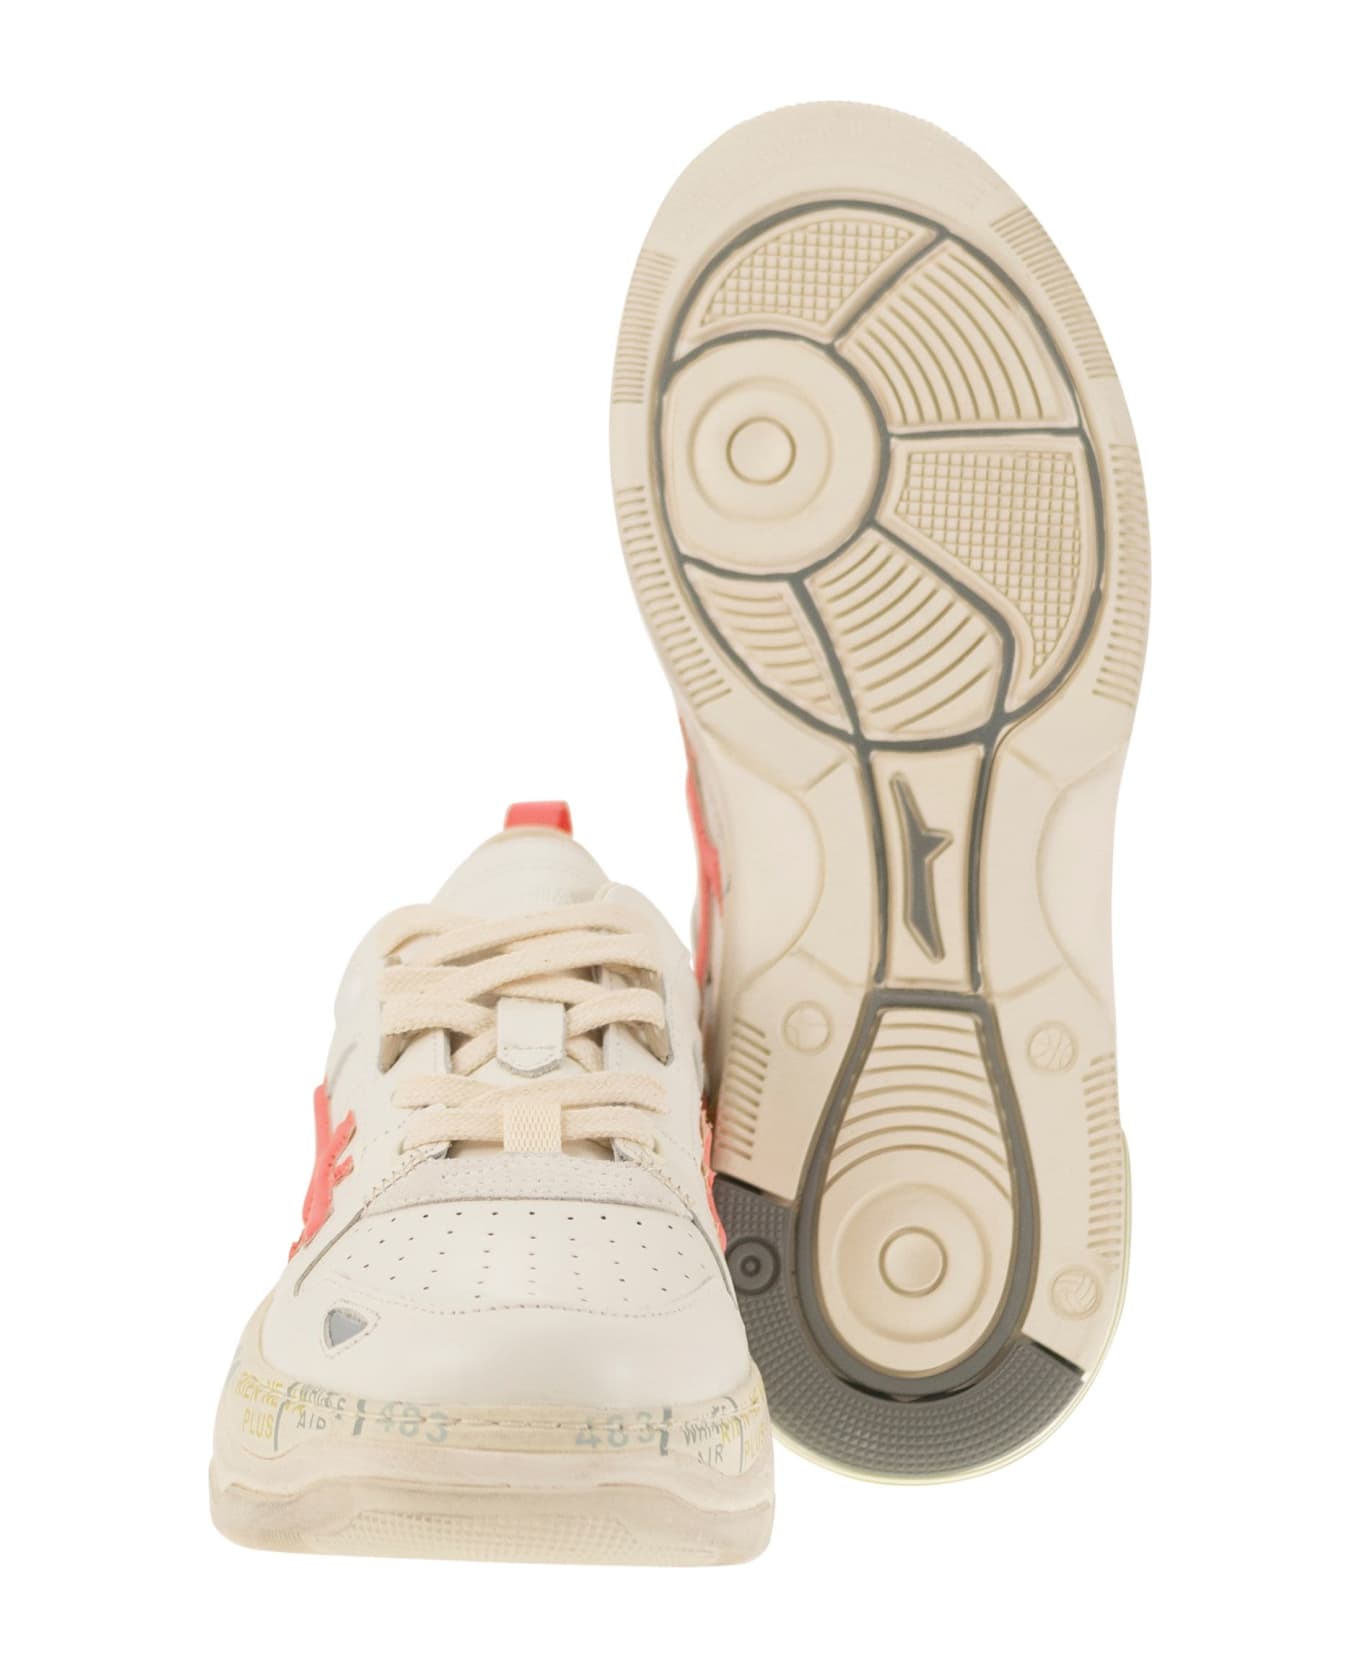 Premiata Draked 310 - Sneakers - White/pink スニーカー